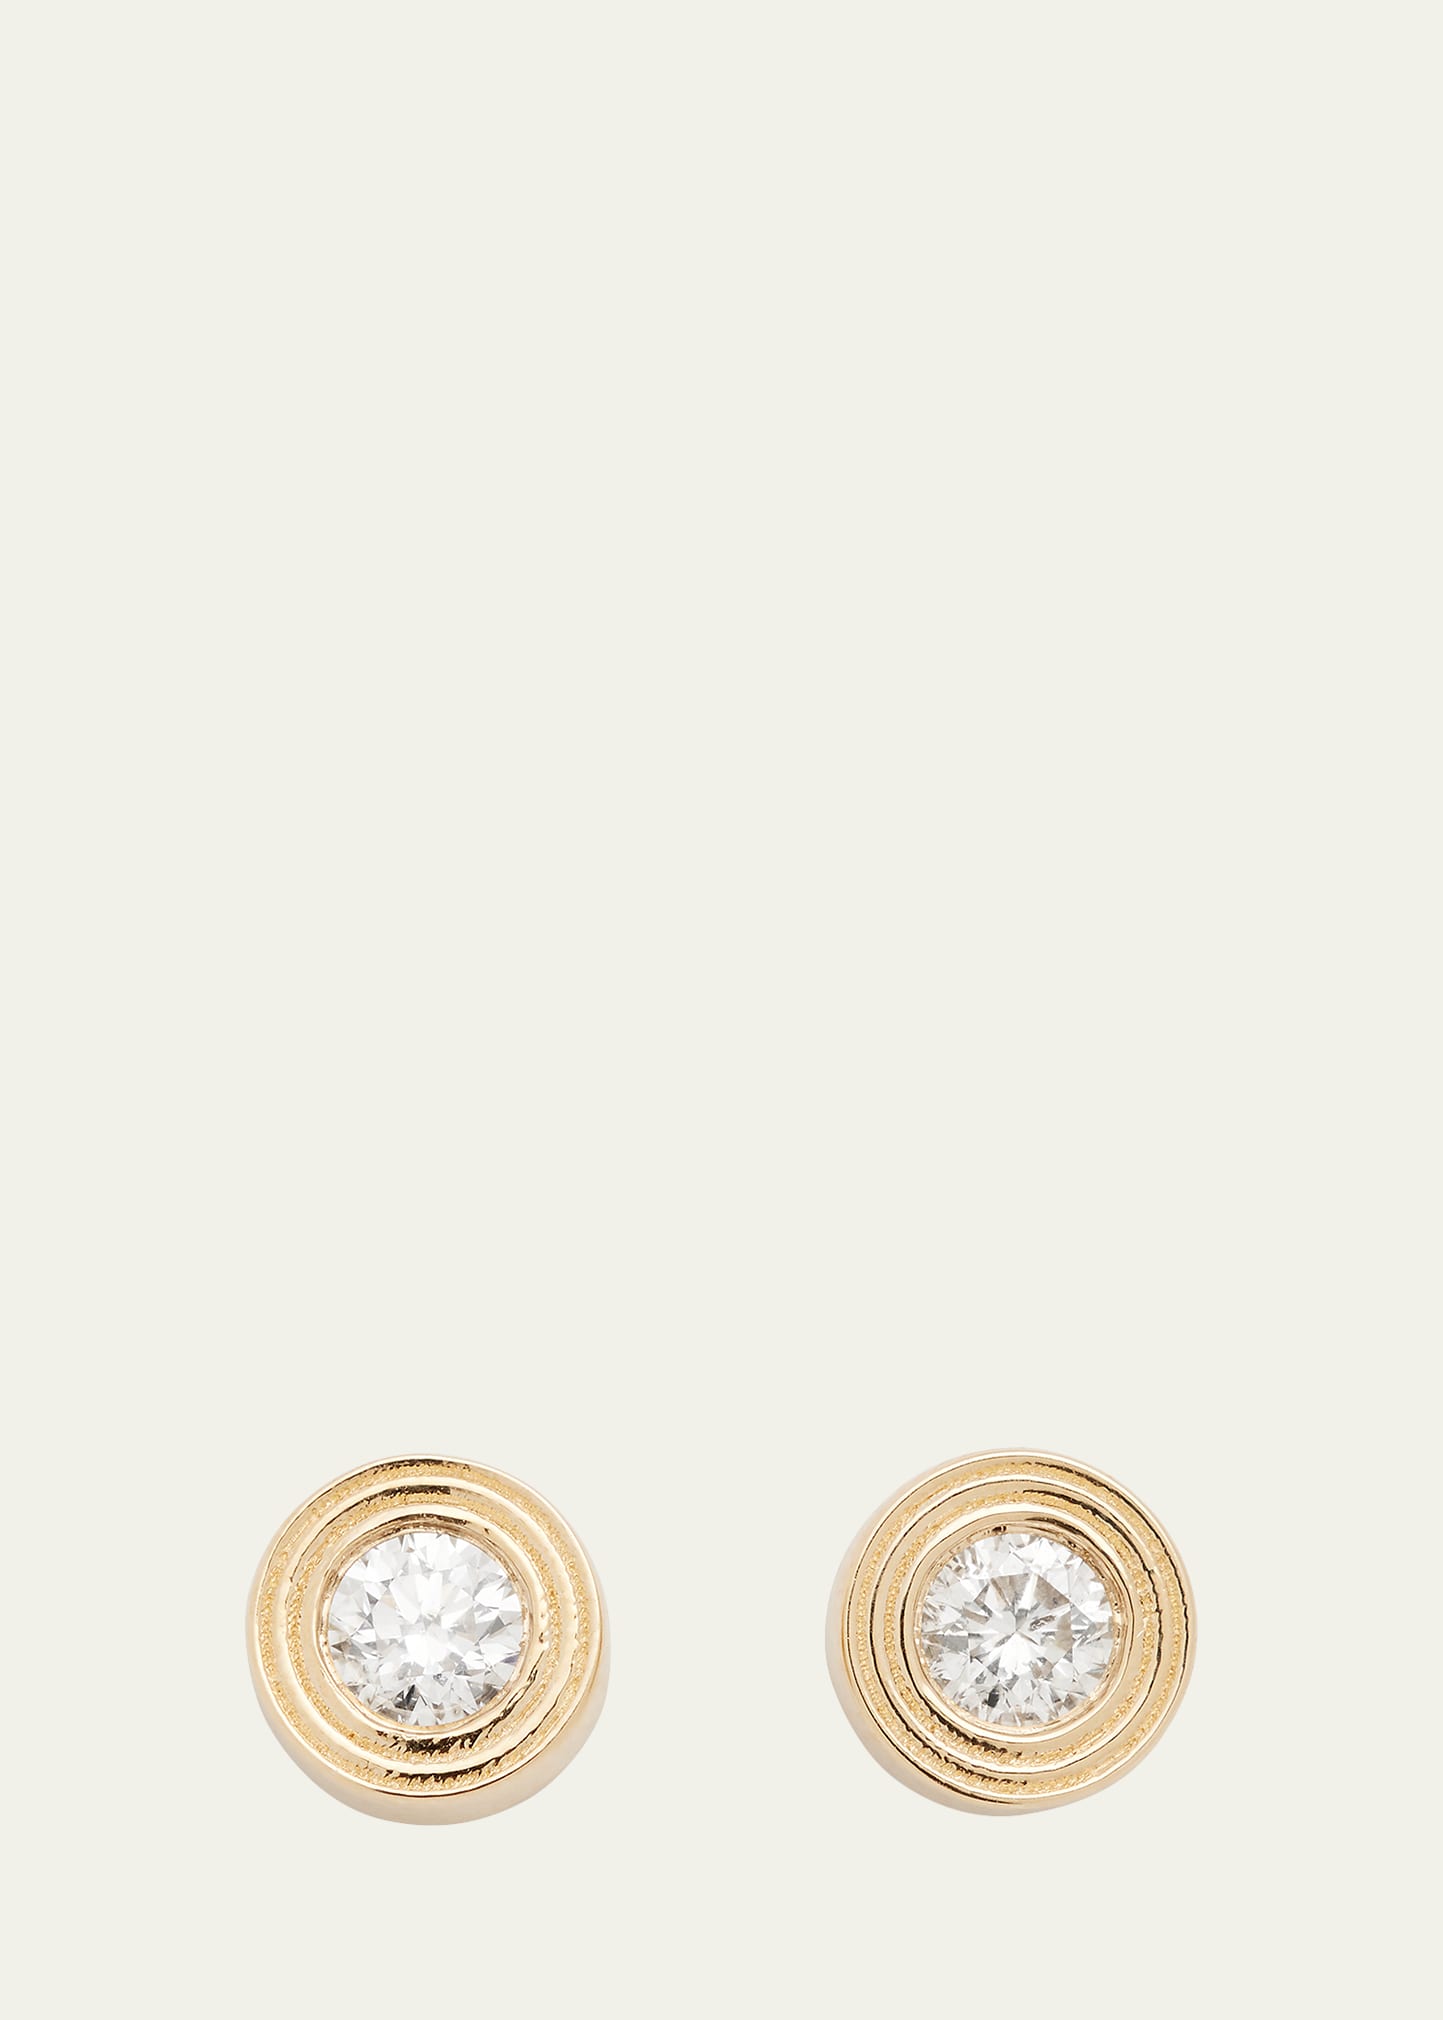 Sydney Evan Fluted 14k Gold And Diamond Stud Earrings